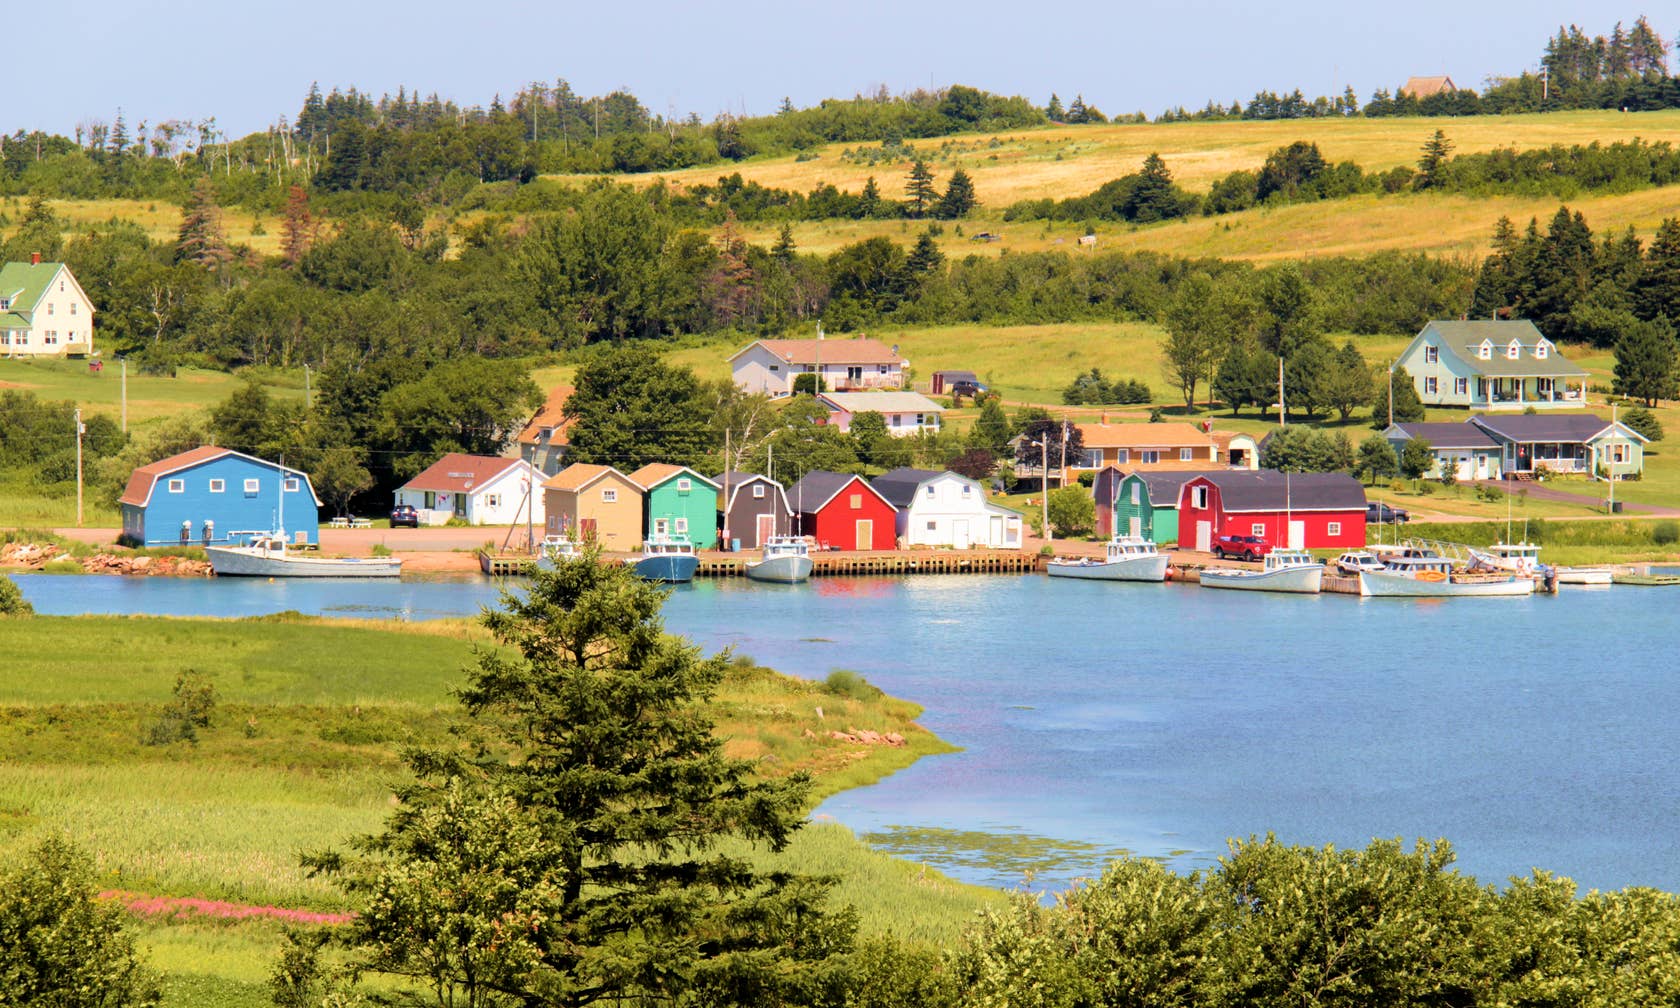 Vacation rentals in Prince Edward Island